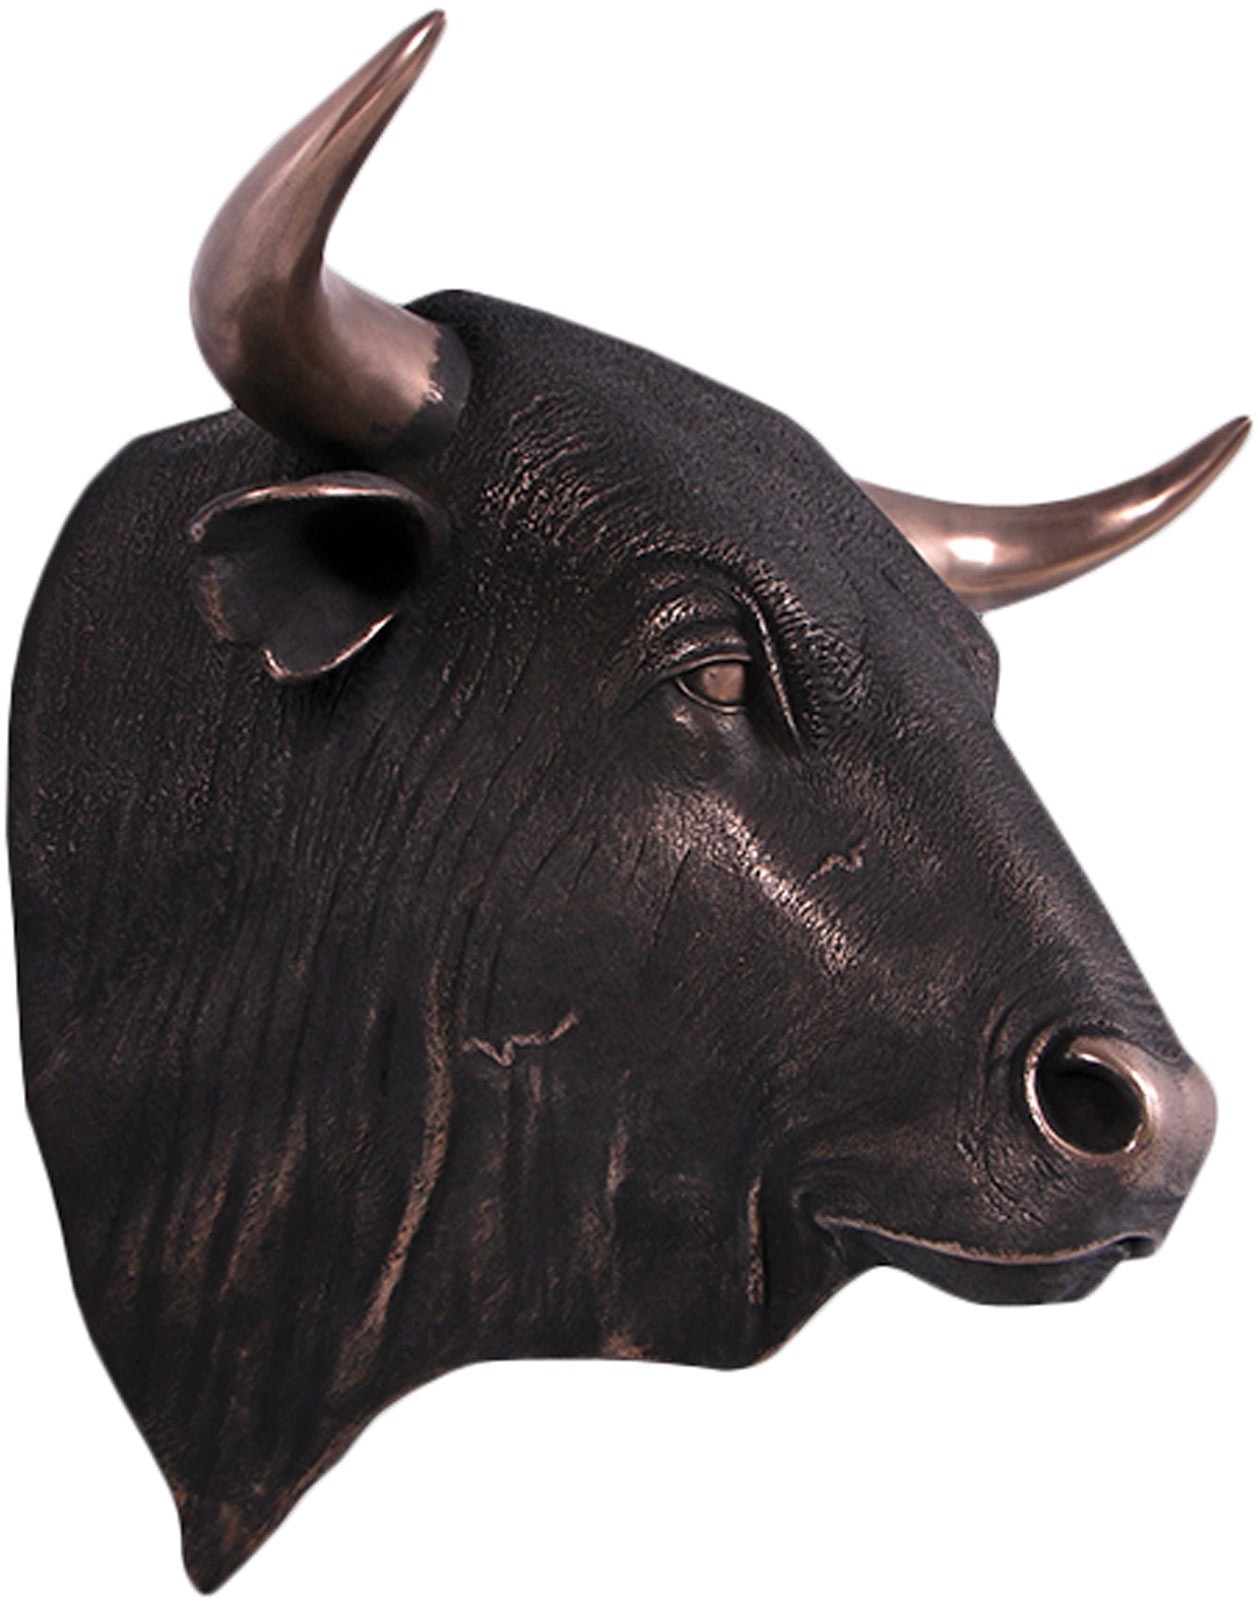 Bulls Head - Imperial Bronze Finish